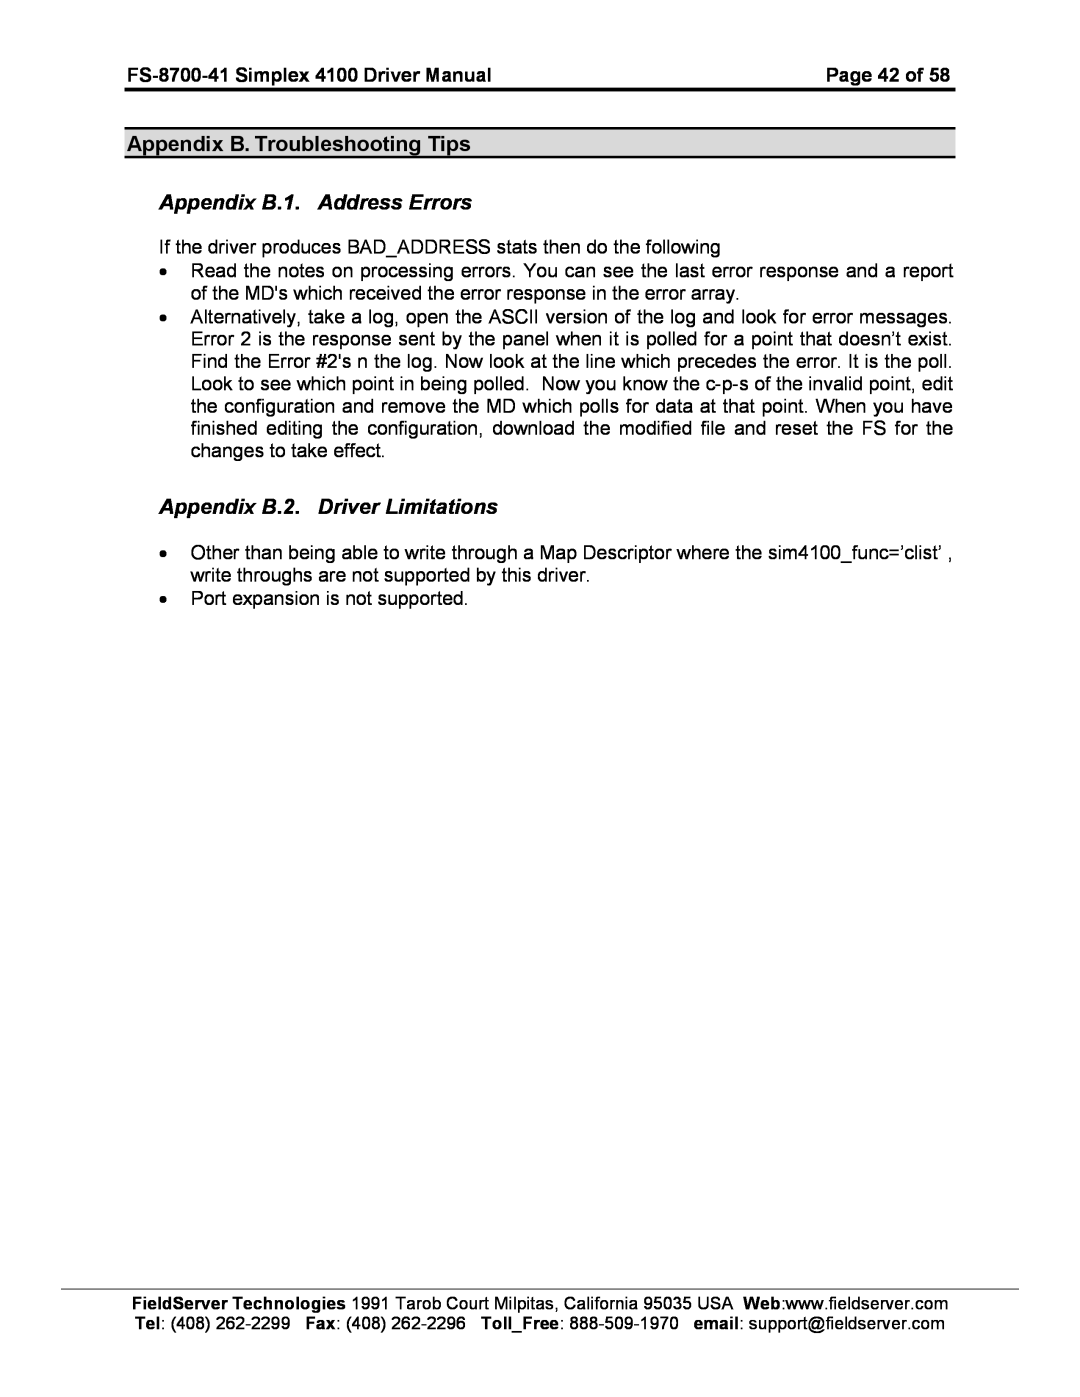 FieldServer FS-8700-41 Appendix B. Troubleshooting Tips, Appendix B.1. Address Errors, Appendix B.2. Driver Limitations 